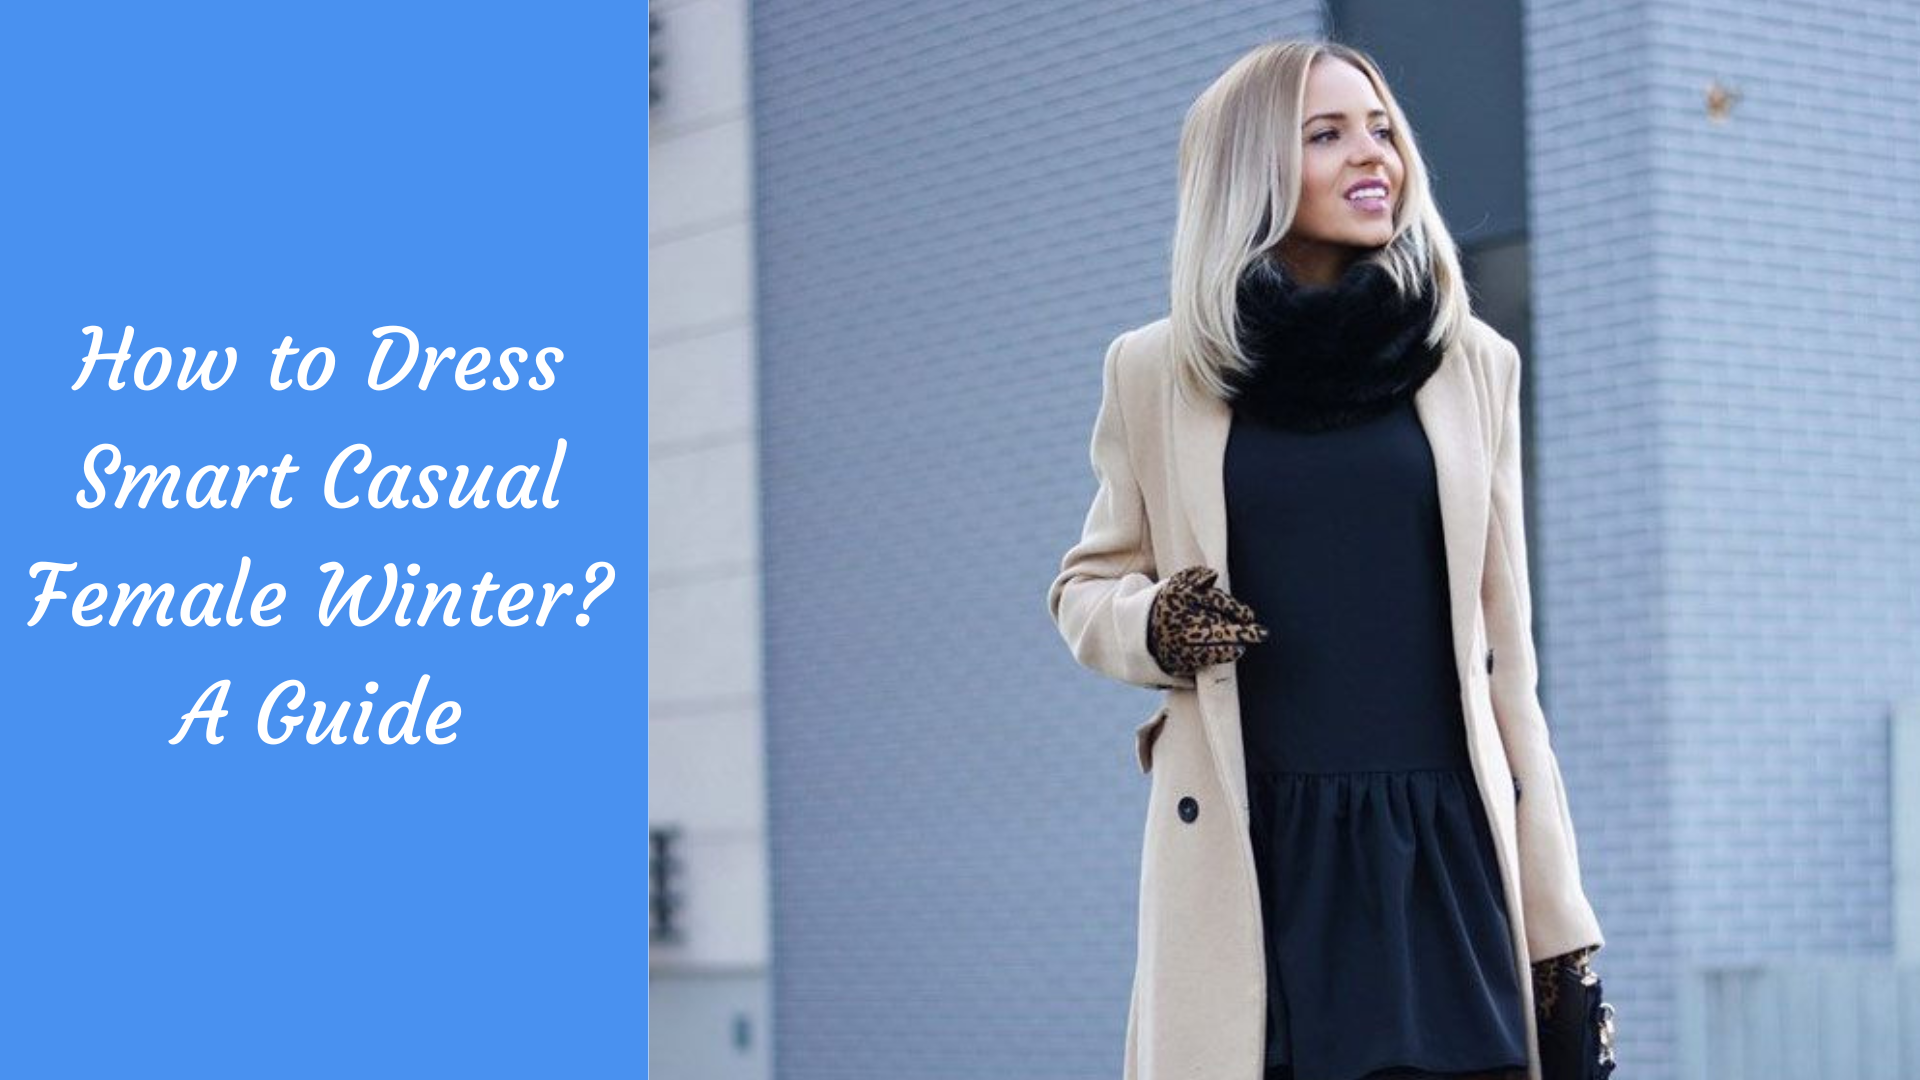 Dressing Smart: 5 Office Essentials For Women